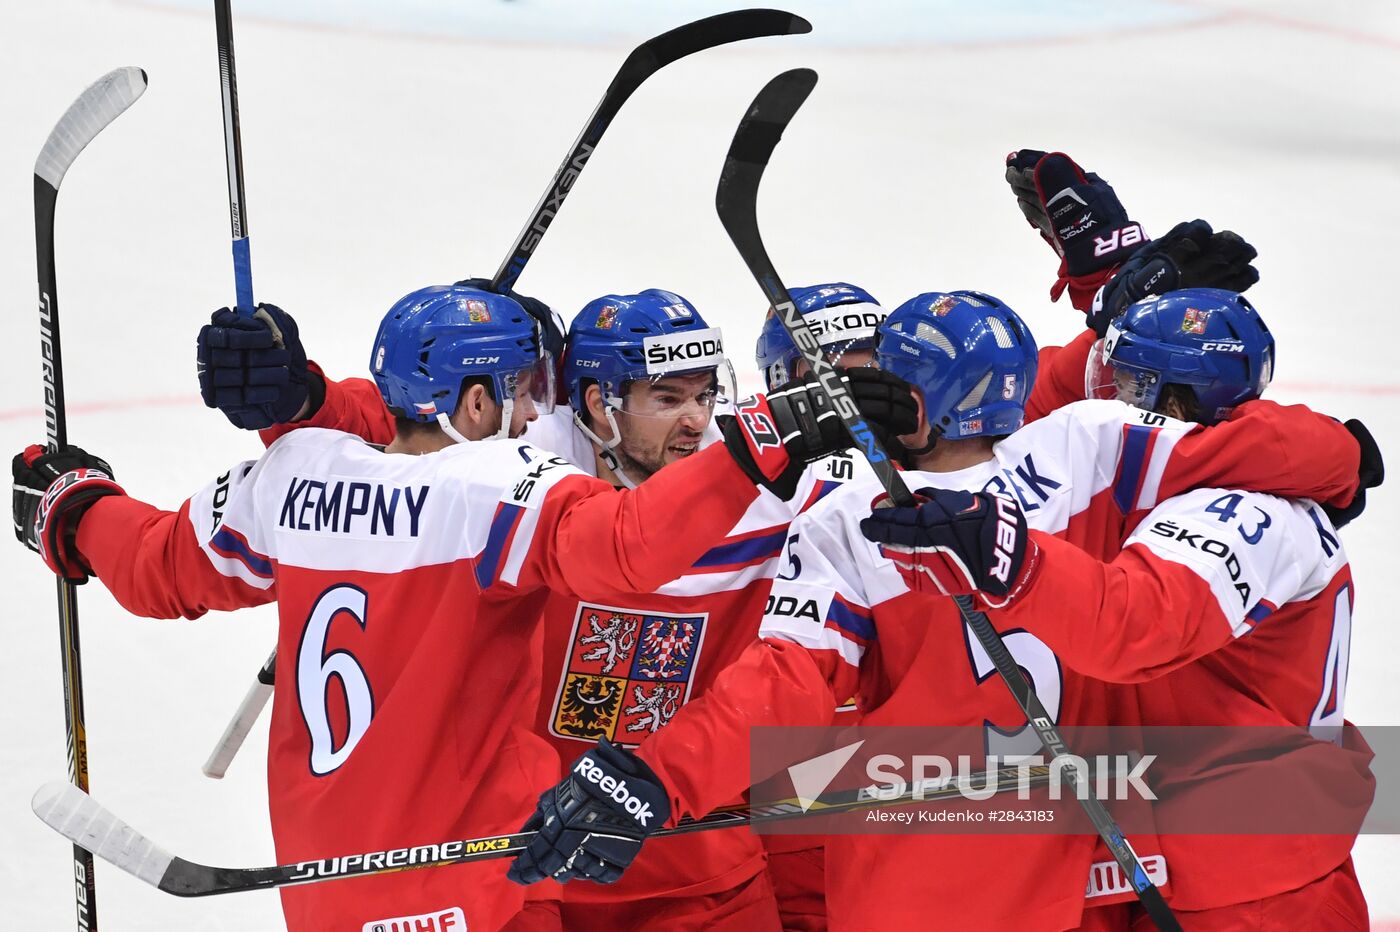 2016 IIHF World Ice Hockey Championship. Sweden vs. Czech Republic